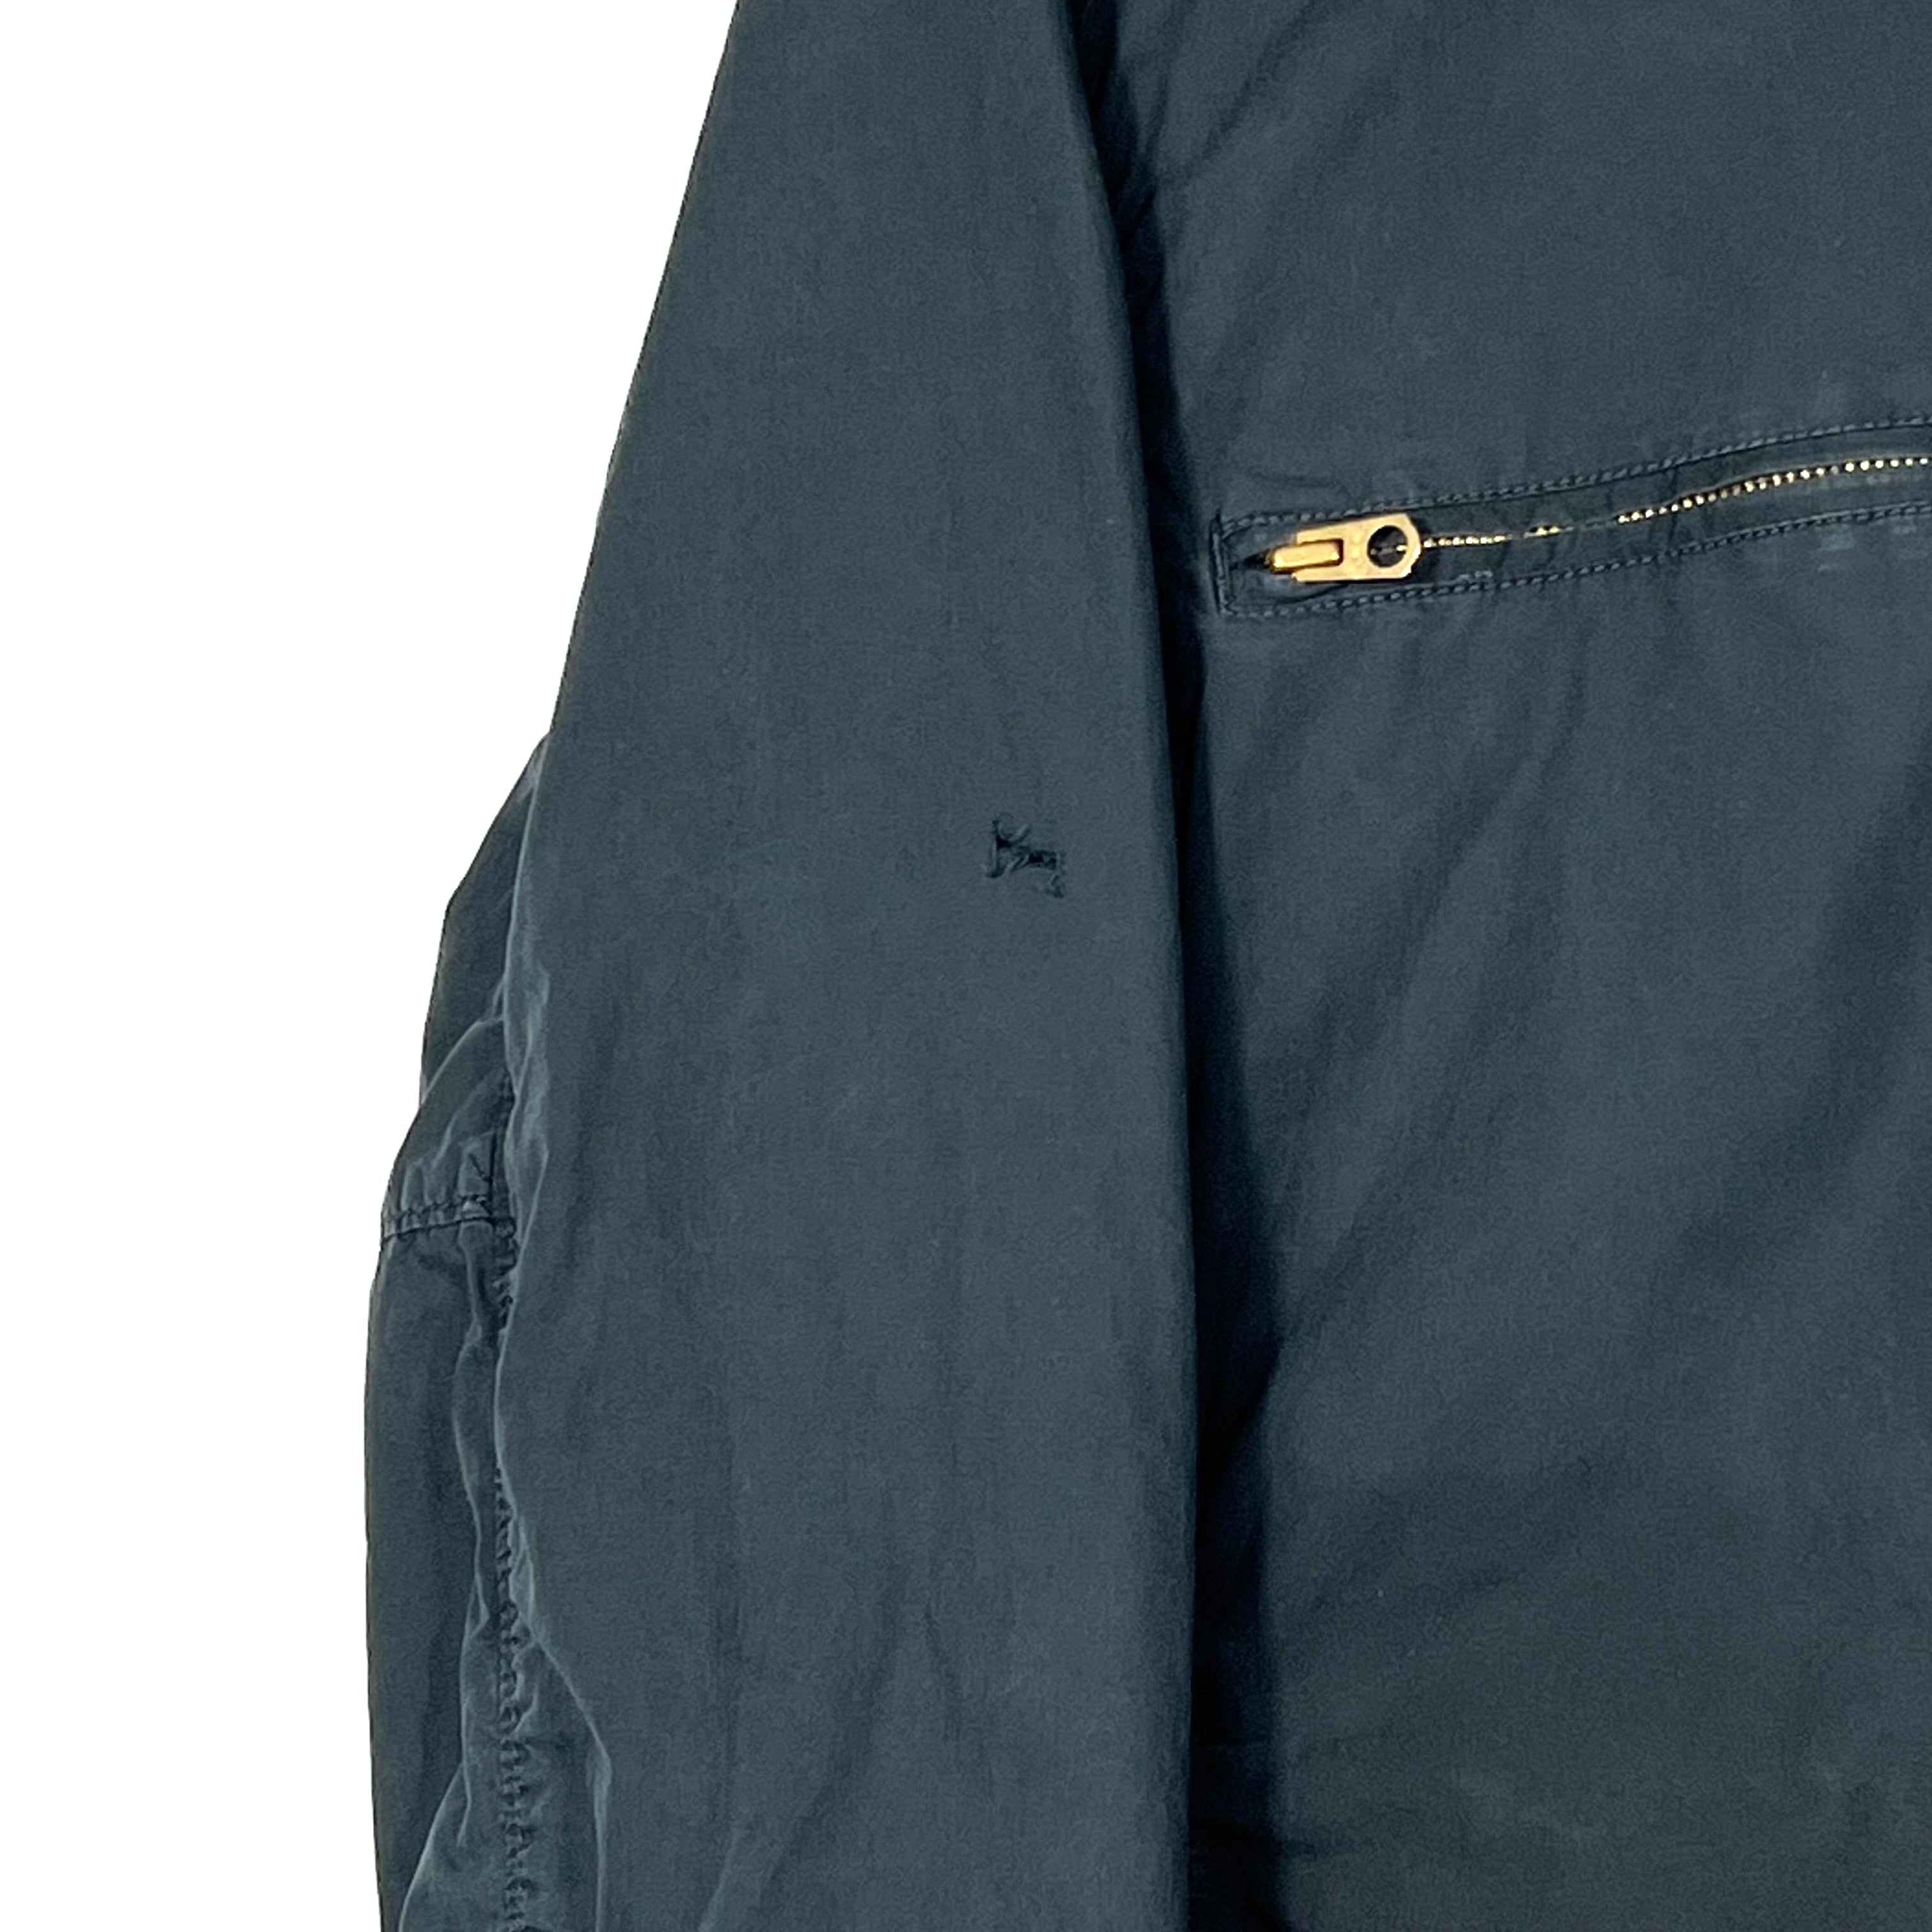 Vintage Polo Ralph Lauren Lightweight Jacket - Men's Medium